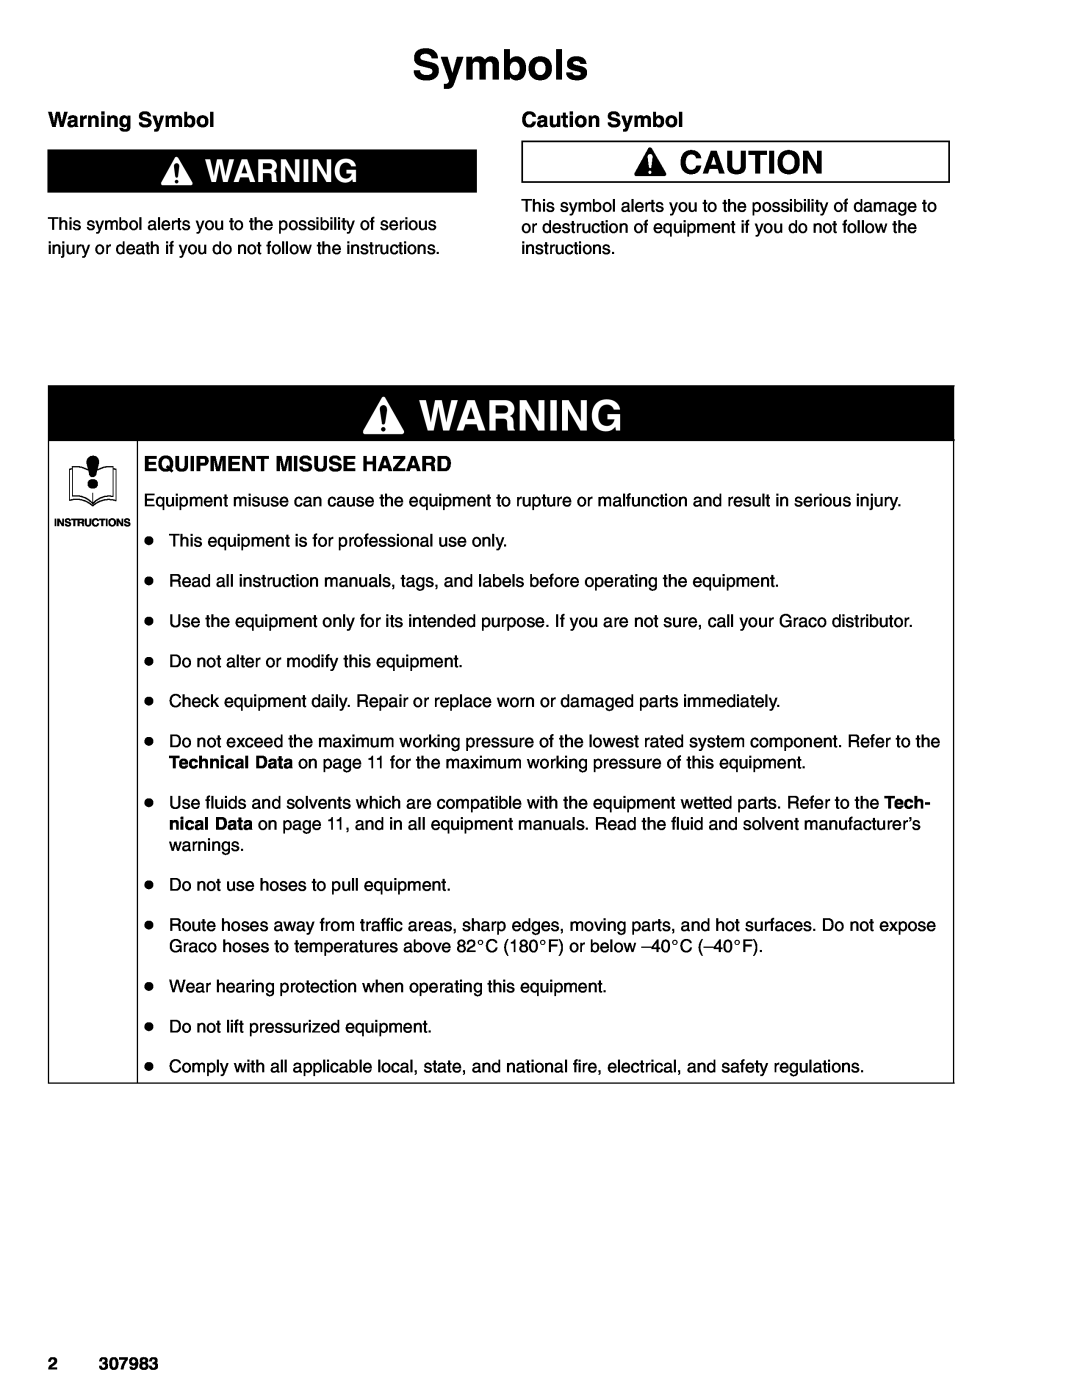 Graco Series D, 223177 important safety instructions Symbols, Warning Symbol, Caution Symbol, Equipment Misuse Hazard 